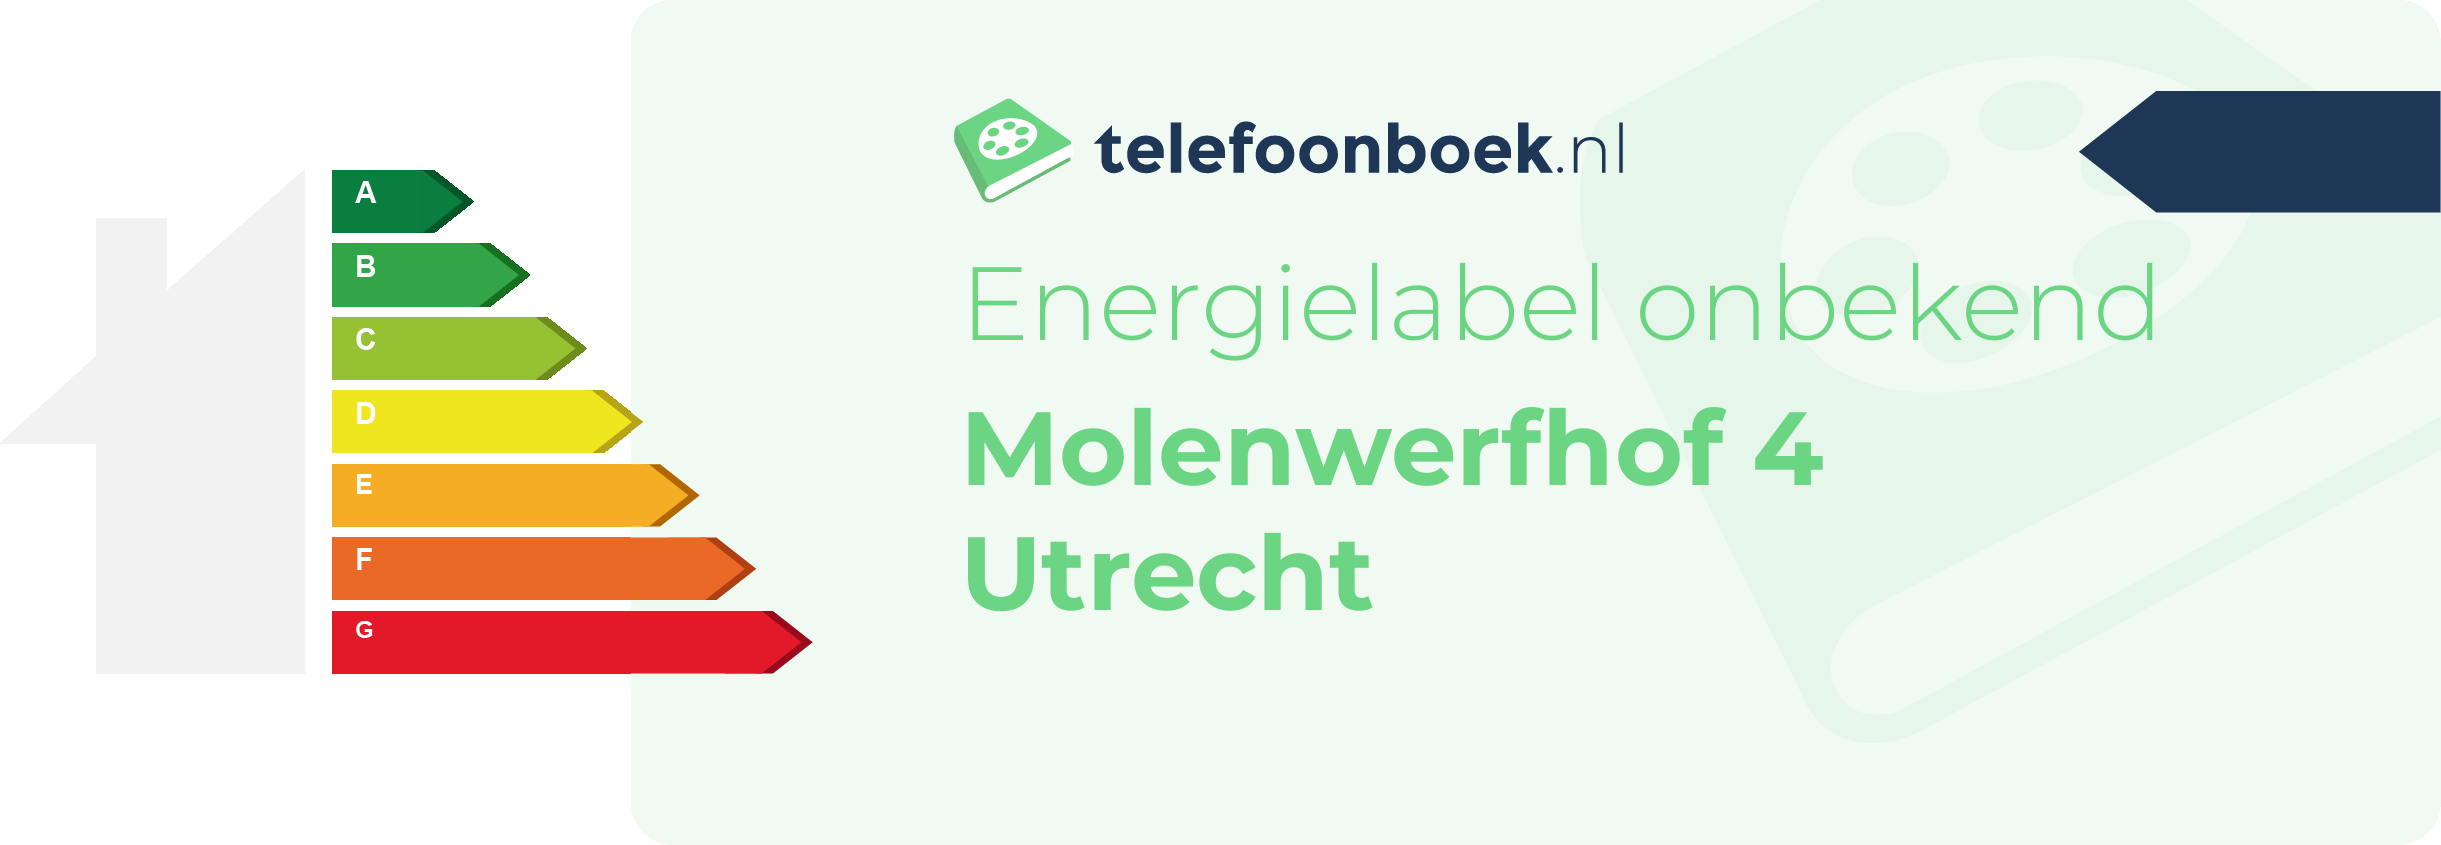 Energielabel Molenwerfhof 4 Utrecht